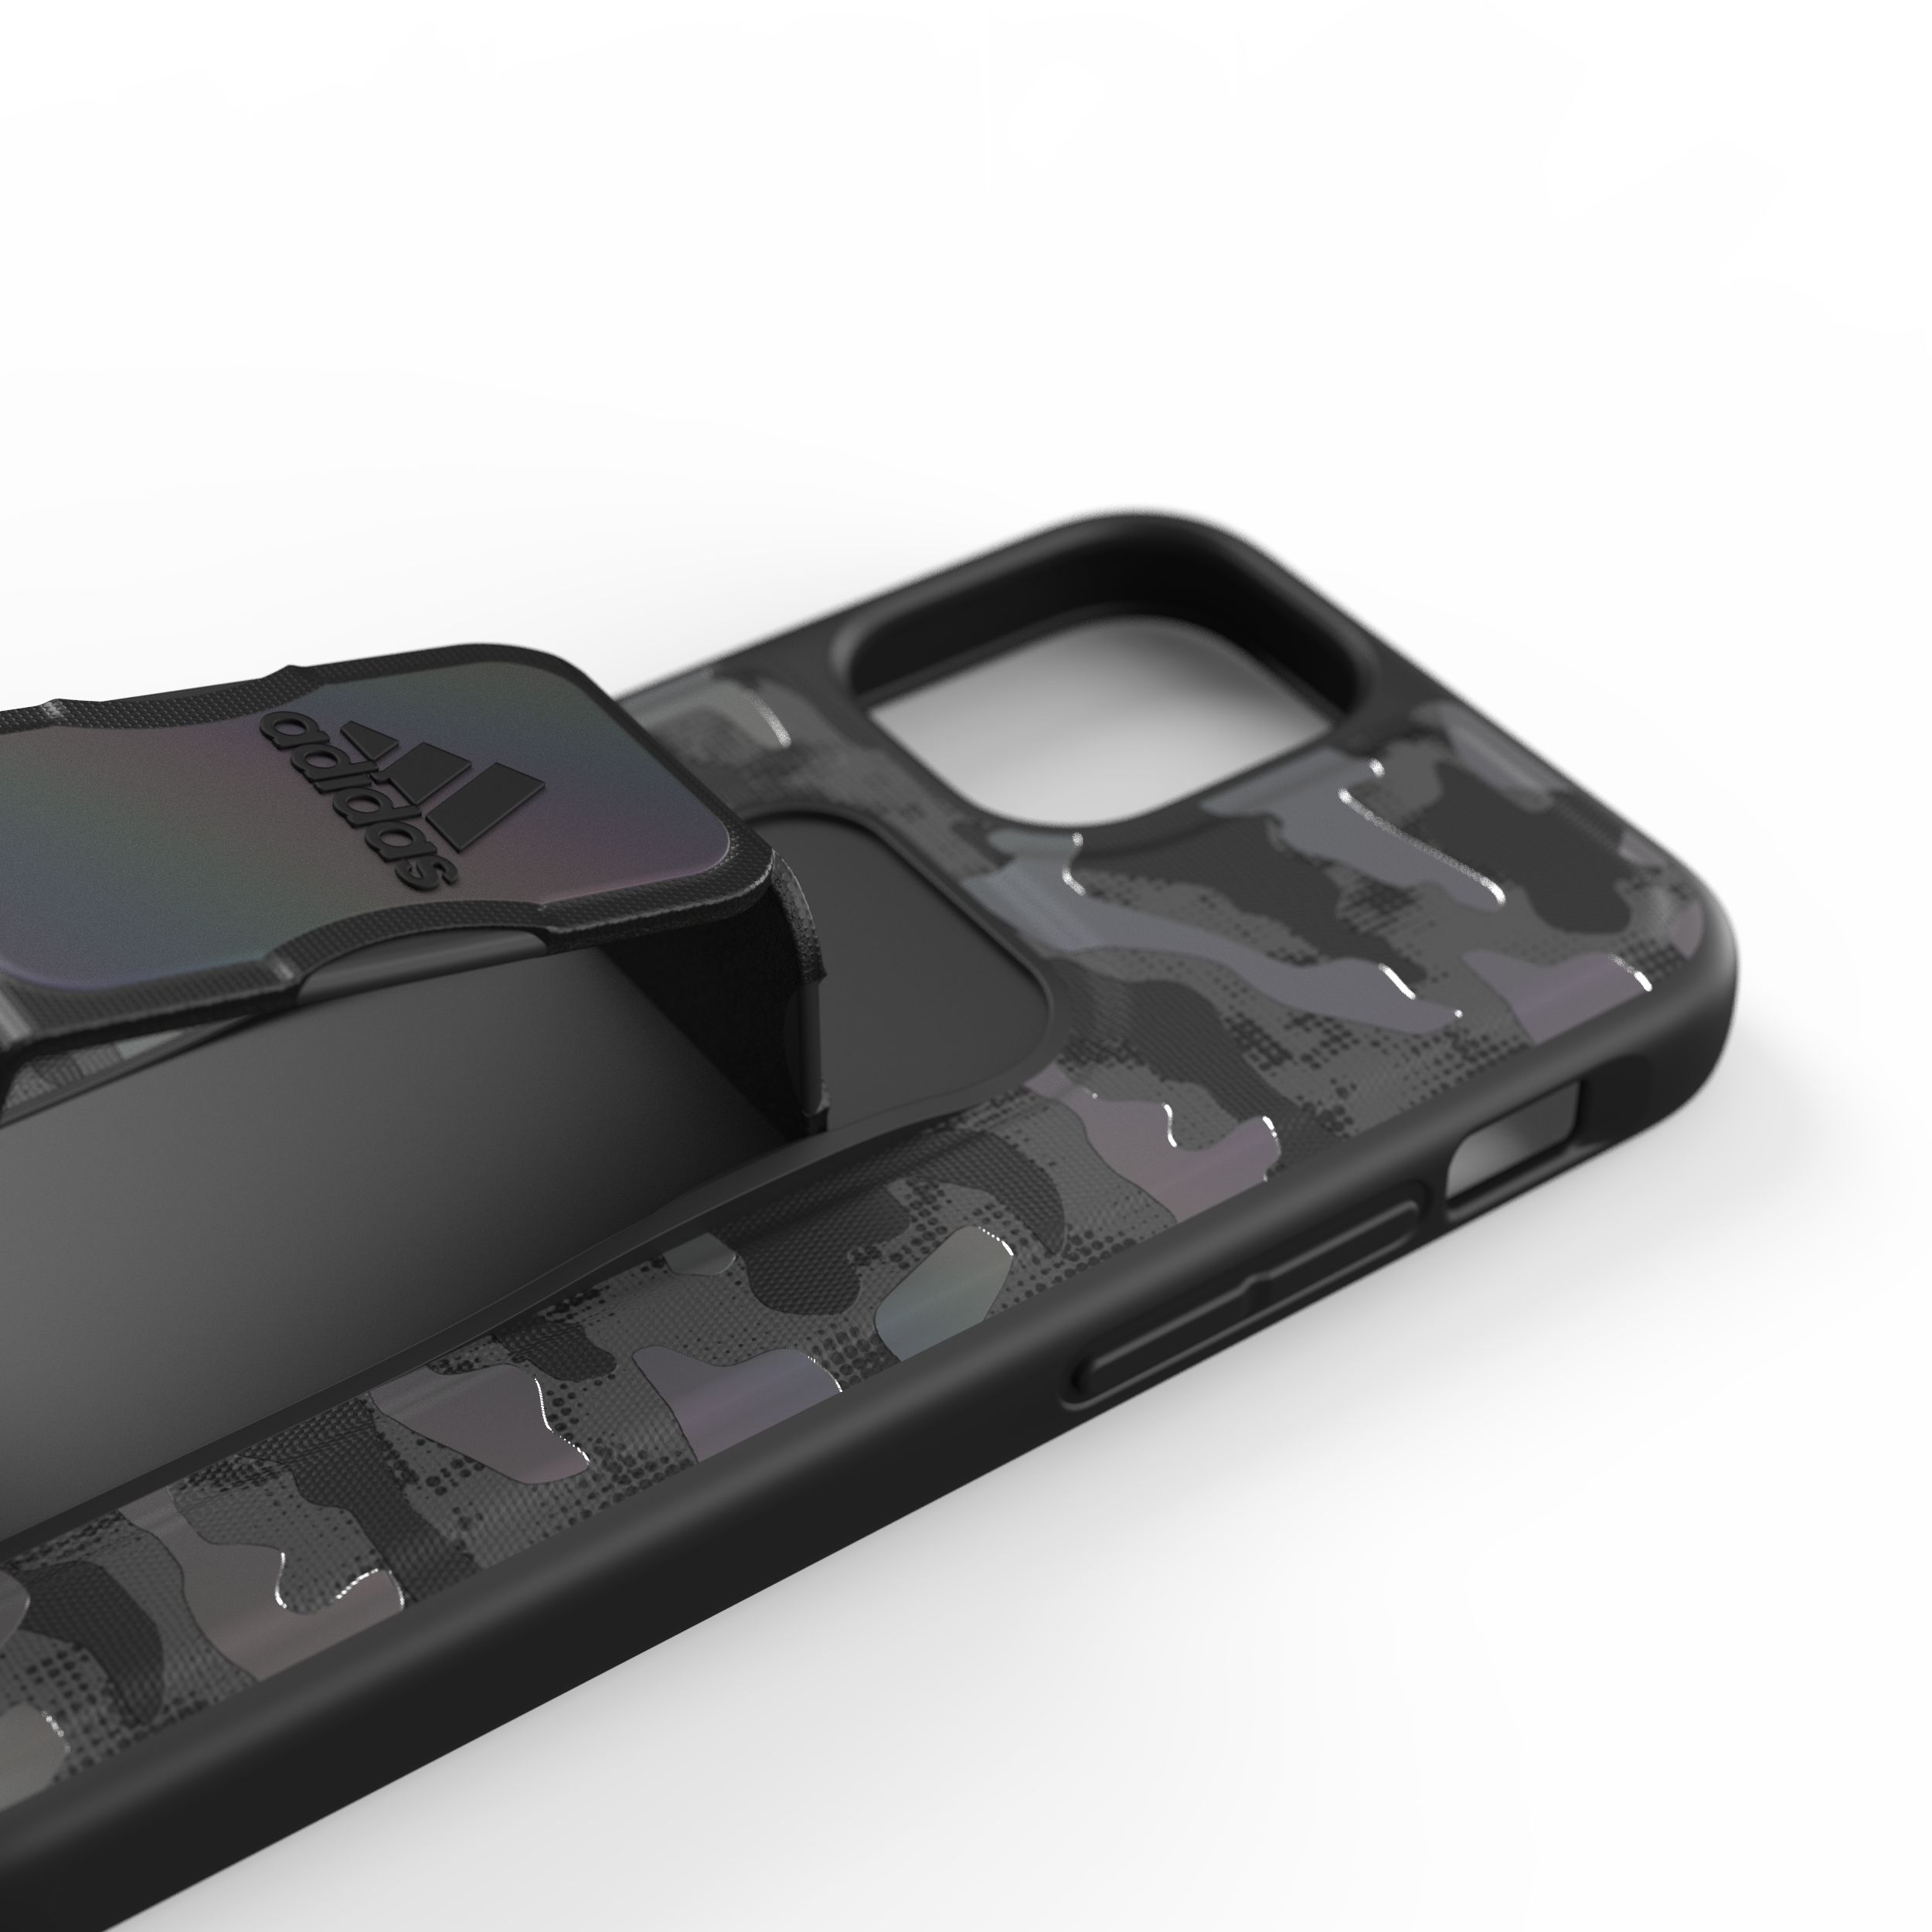 adidas アディダス スマホケース iPhone 12 Mini ケース アイフォン カバー スマホケース スタンド機能 グリップバンド付き 落下防止 スポーツ仕様 耐衝撃 軽量 ランニング アウトドア カモ柄ブラック